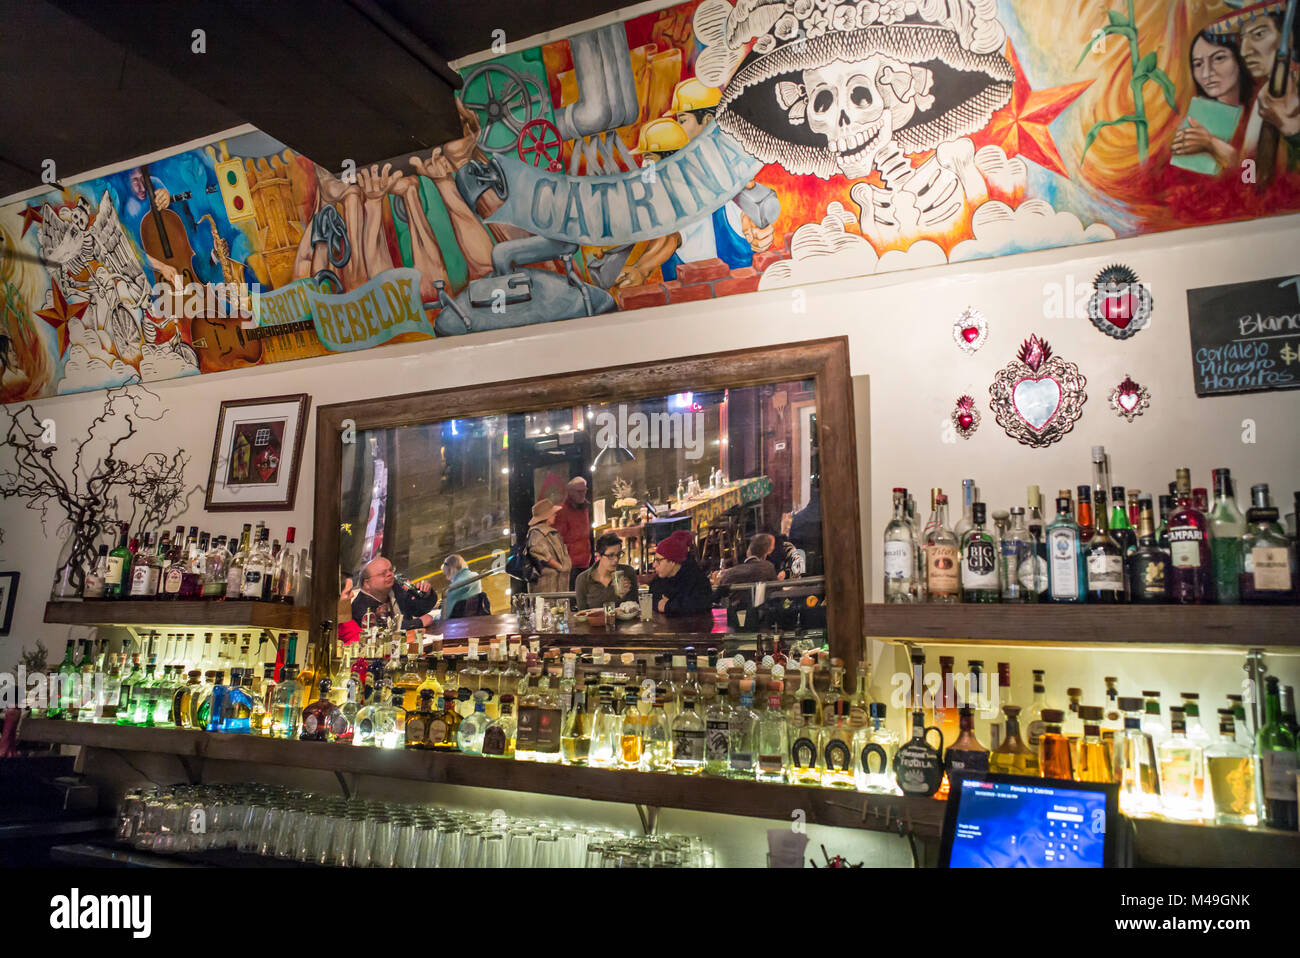 United States, Washington, Seattle, The Fonda La Catrina bar Stock Photo